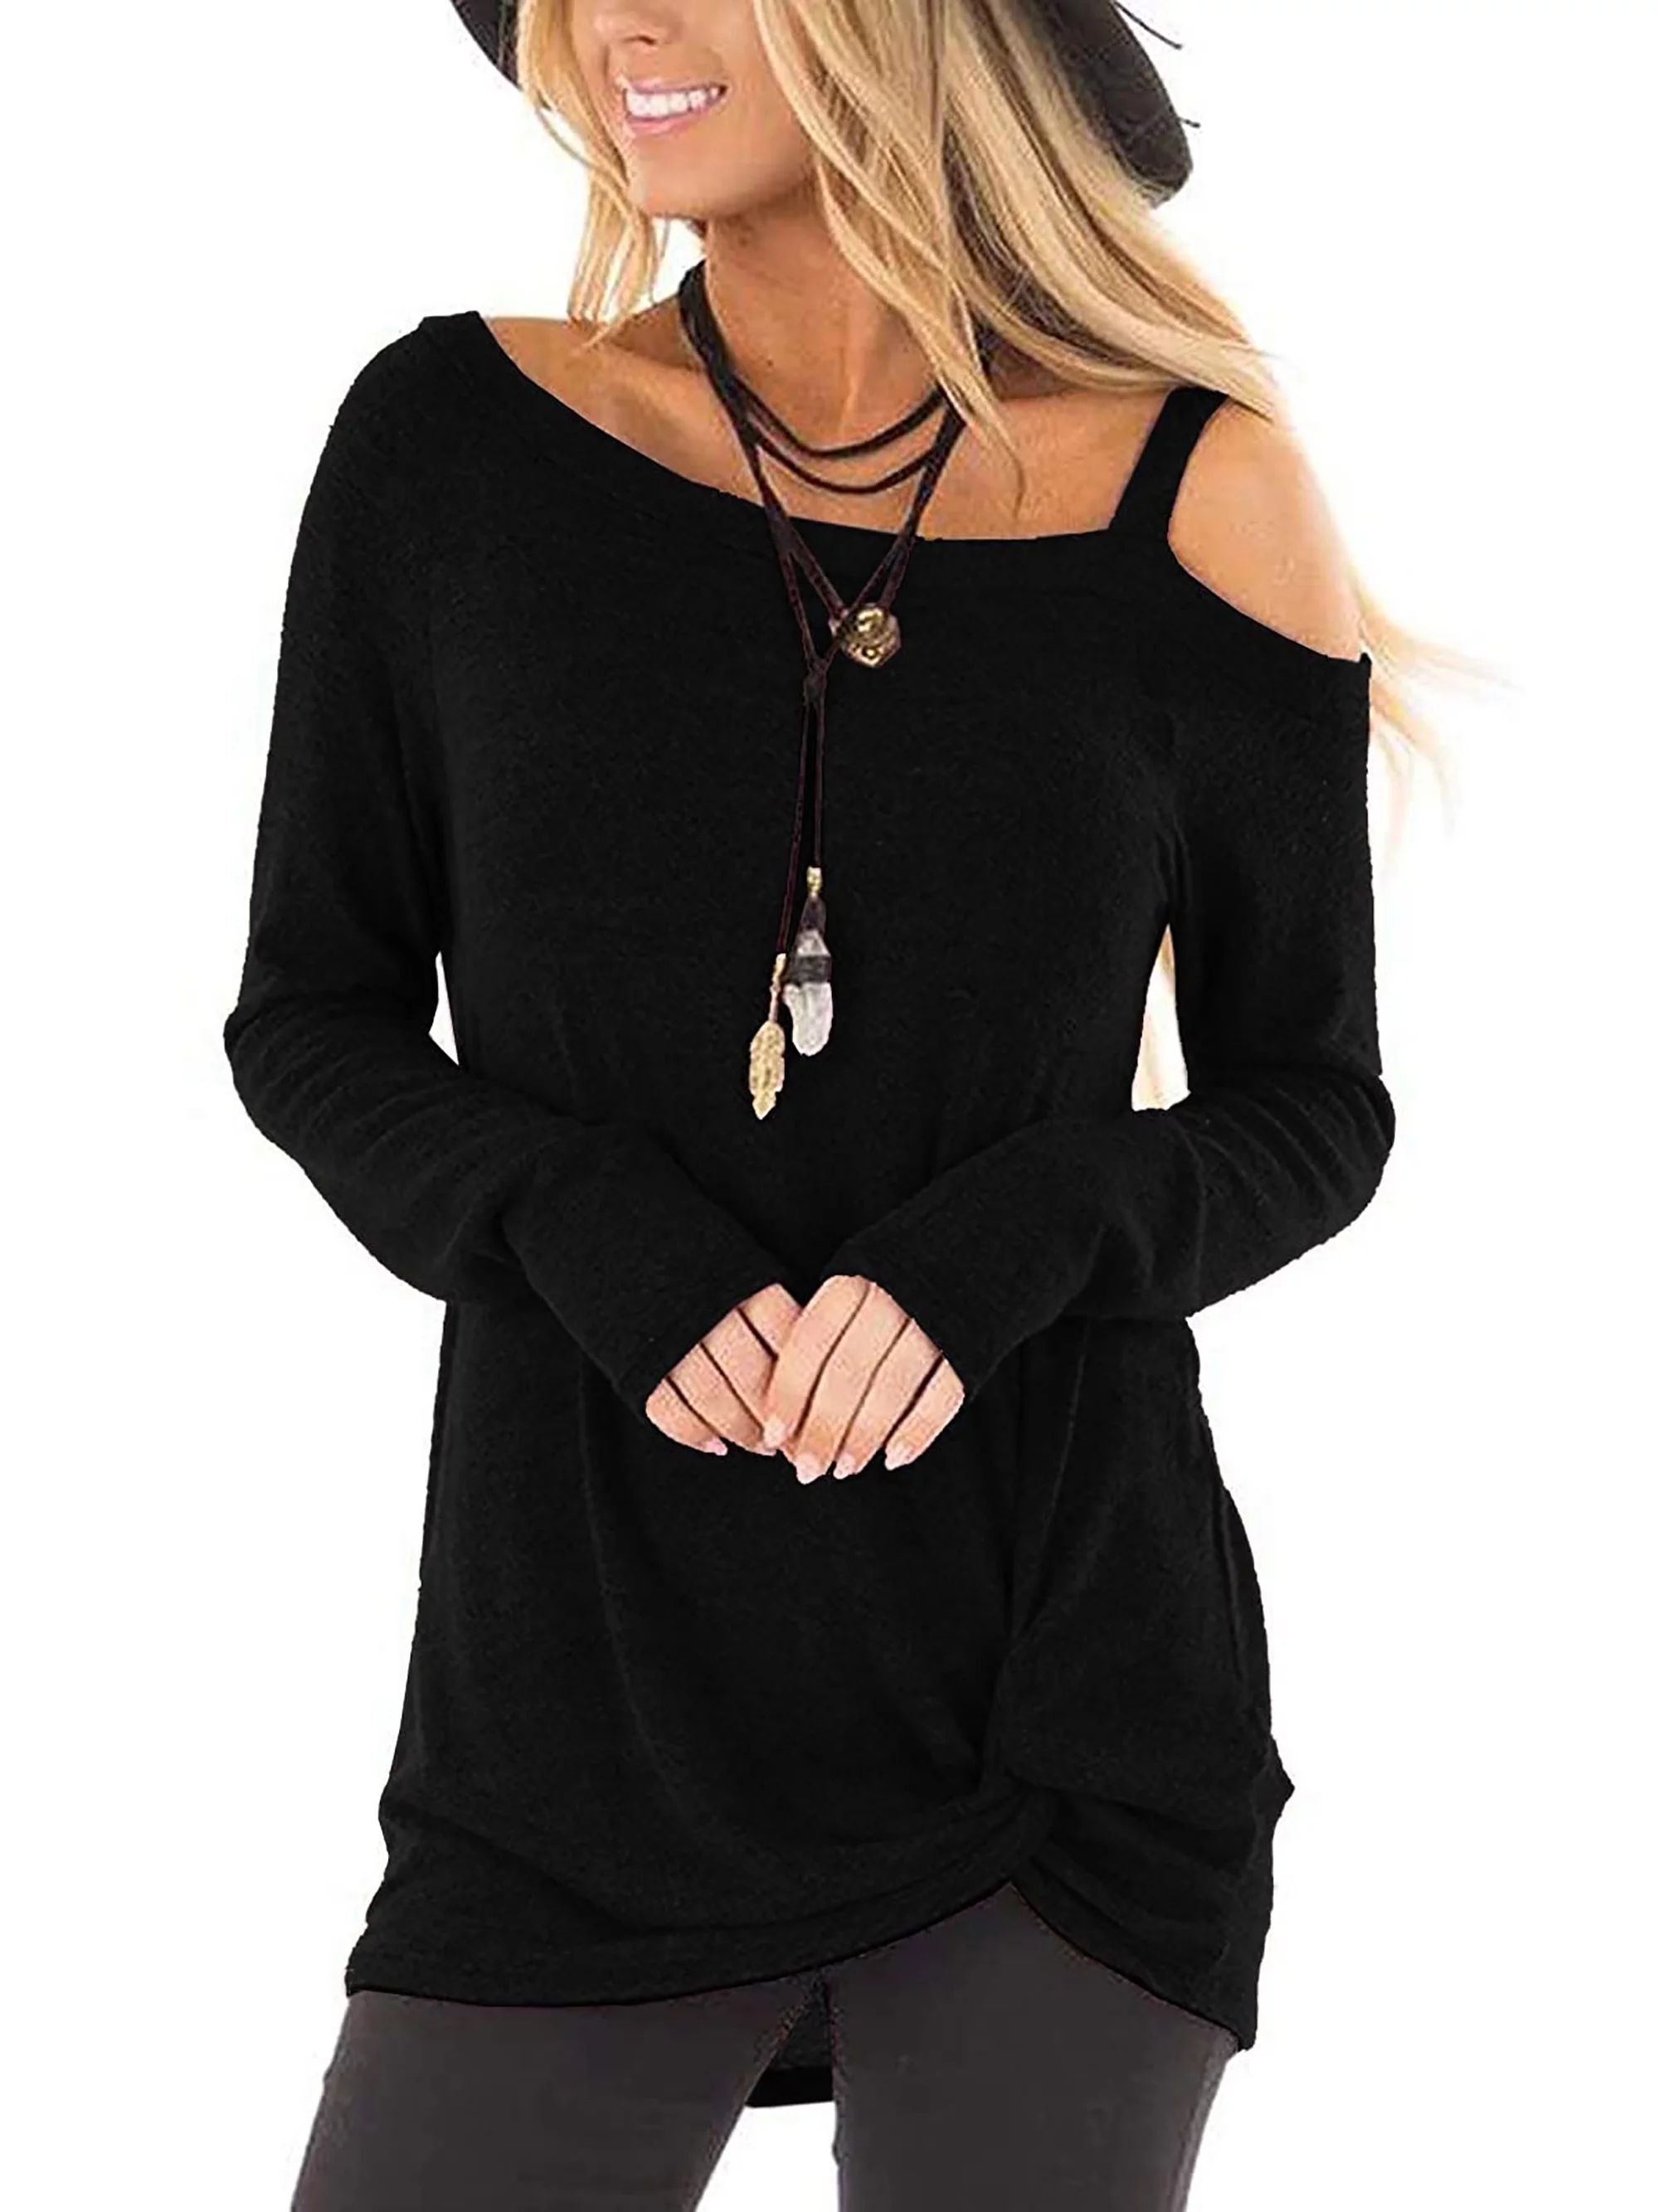 SHIBEVER Long Sleeve Off Shoulder T-Shirts for Women Fall Fashion Cute Casual Tunics Tops Blouses... | Walmart (US)